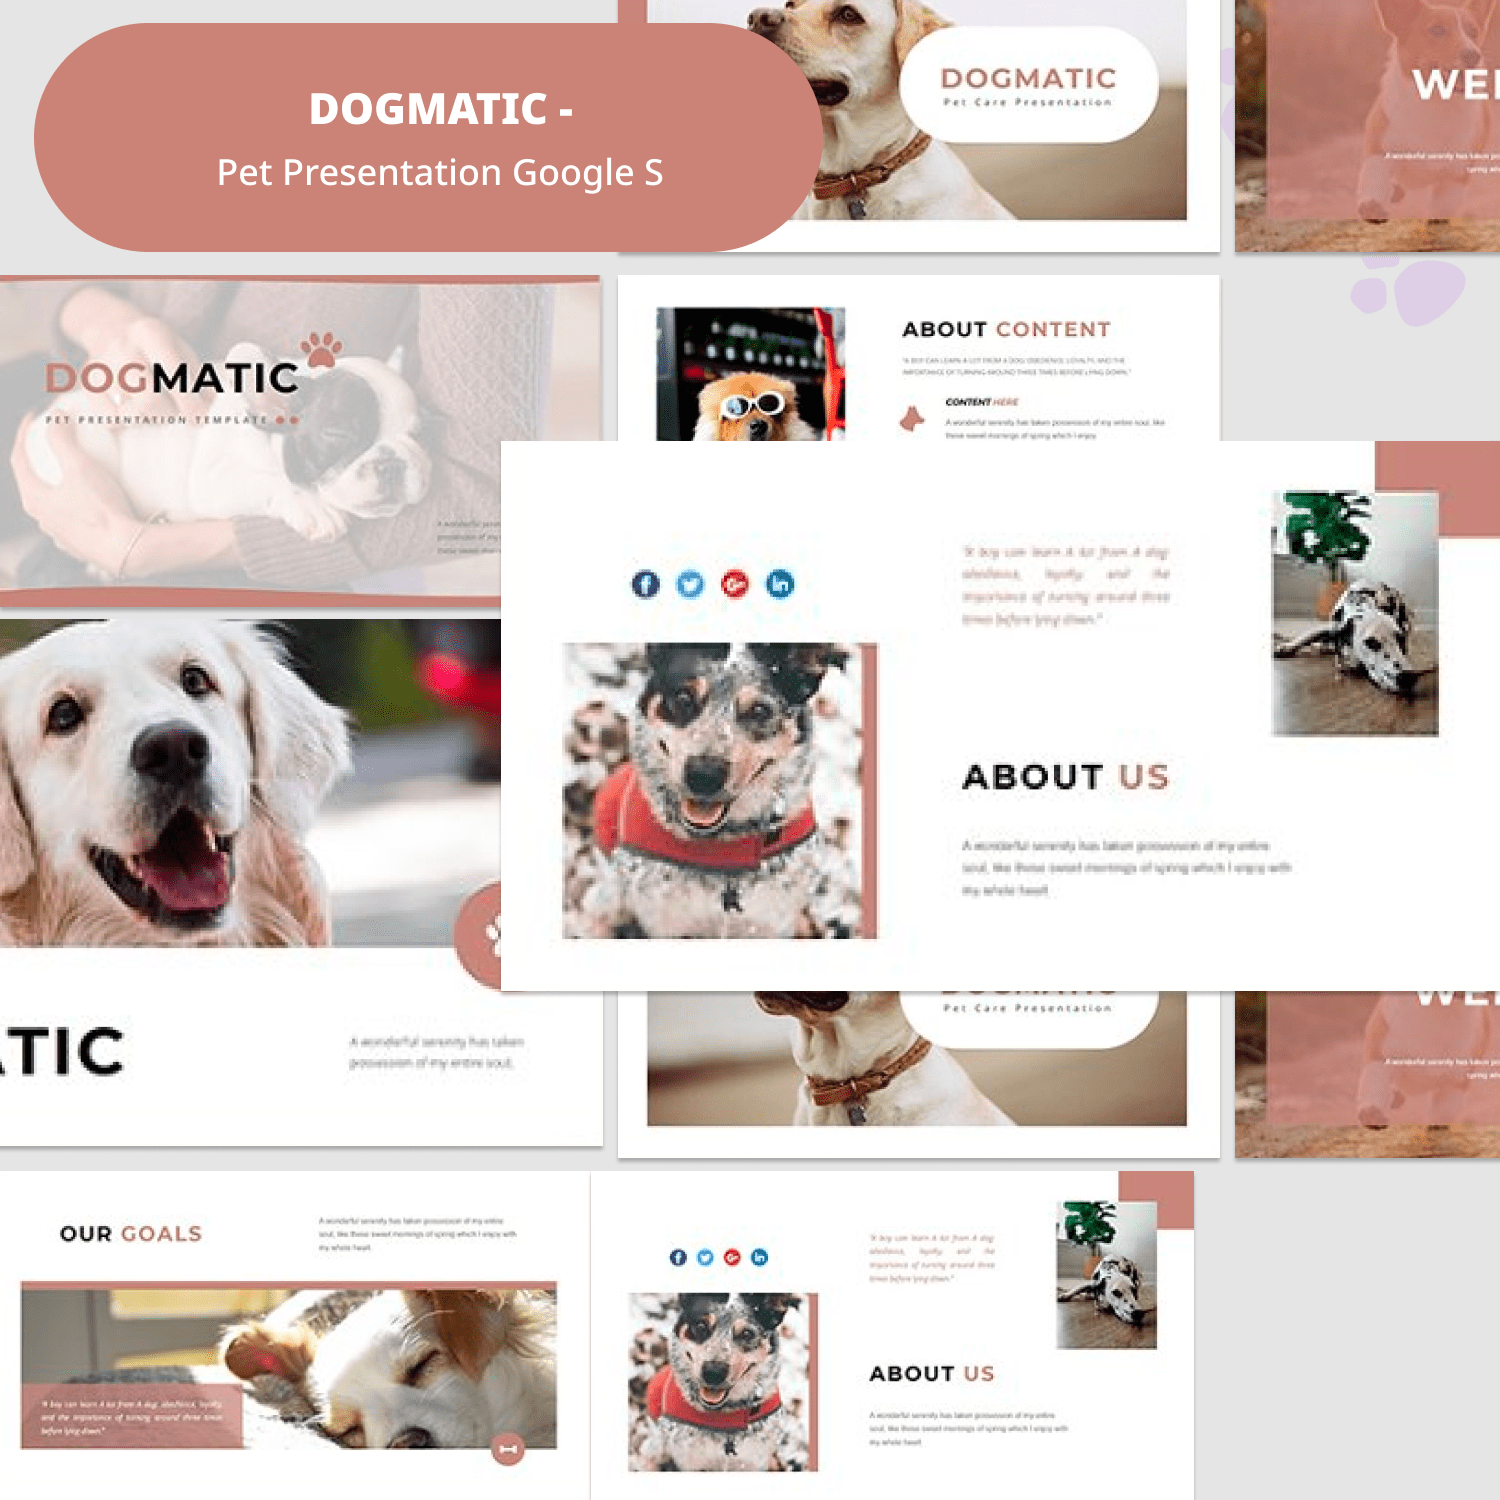 Dogmatic - Pet Presentation Google S cover.